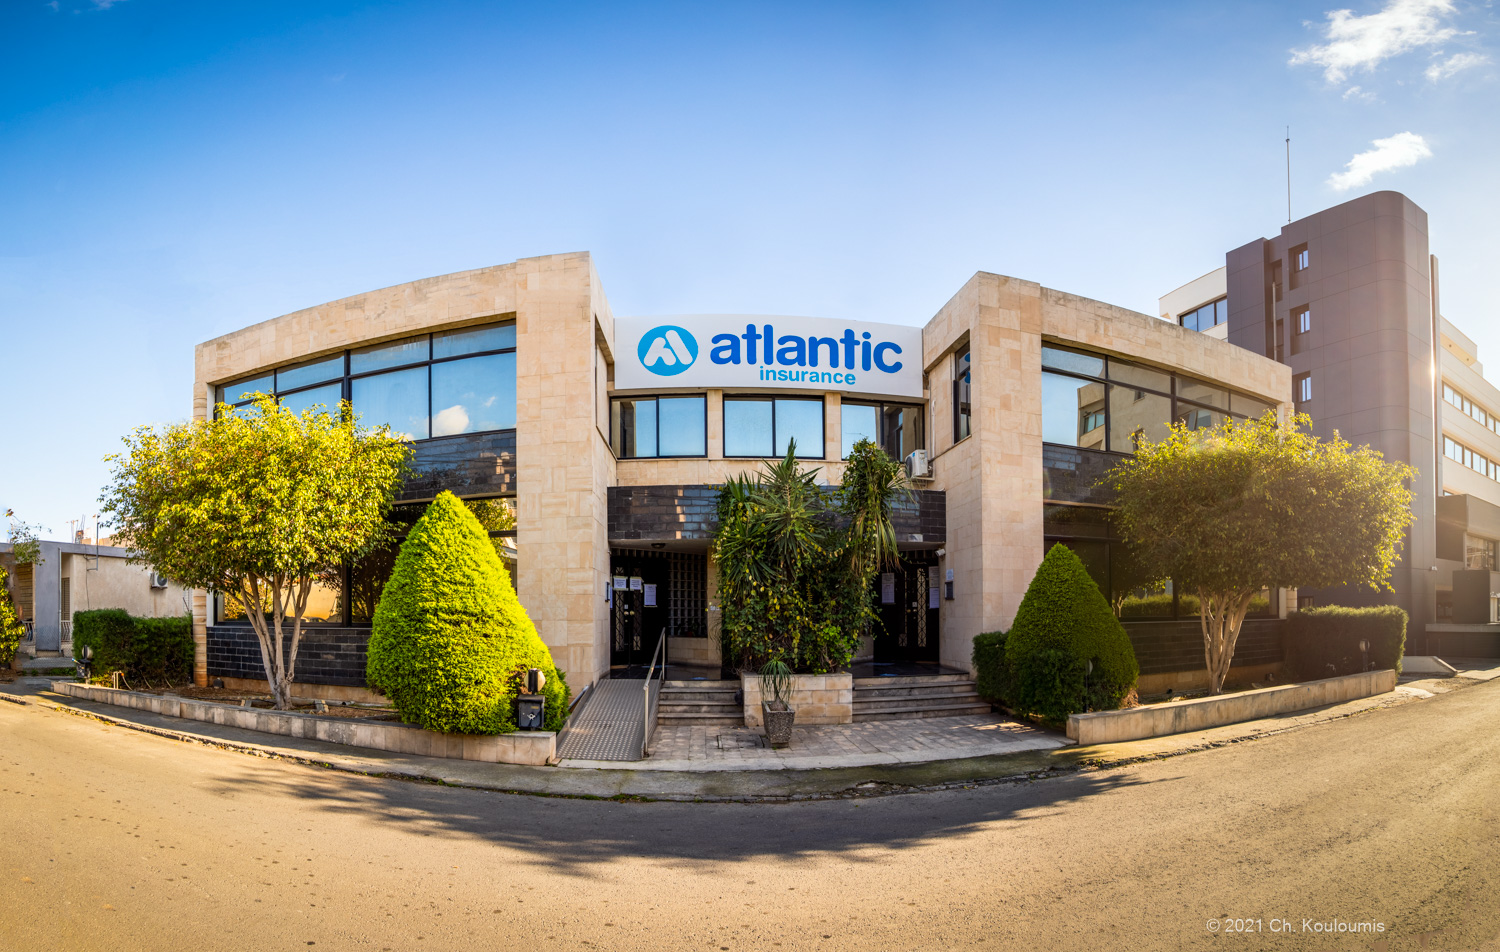 Atlantic Insurance Limassol Branch